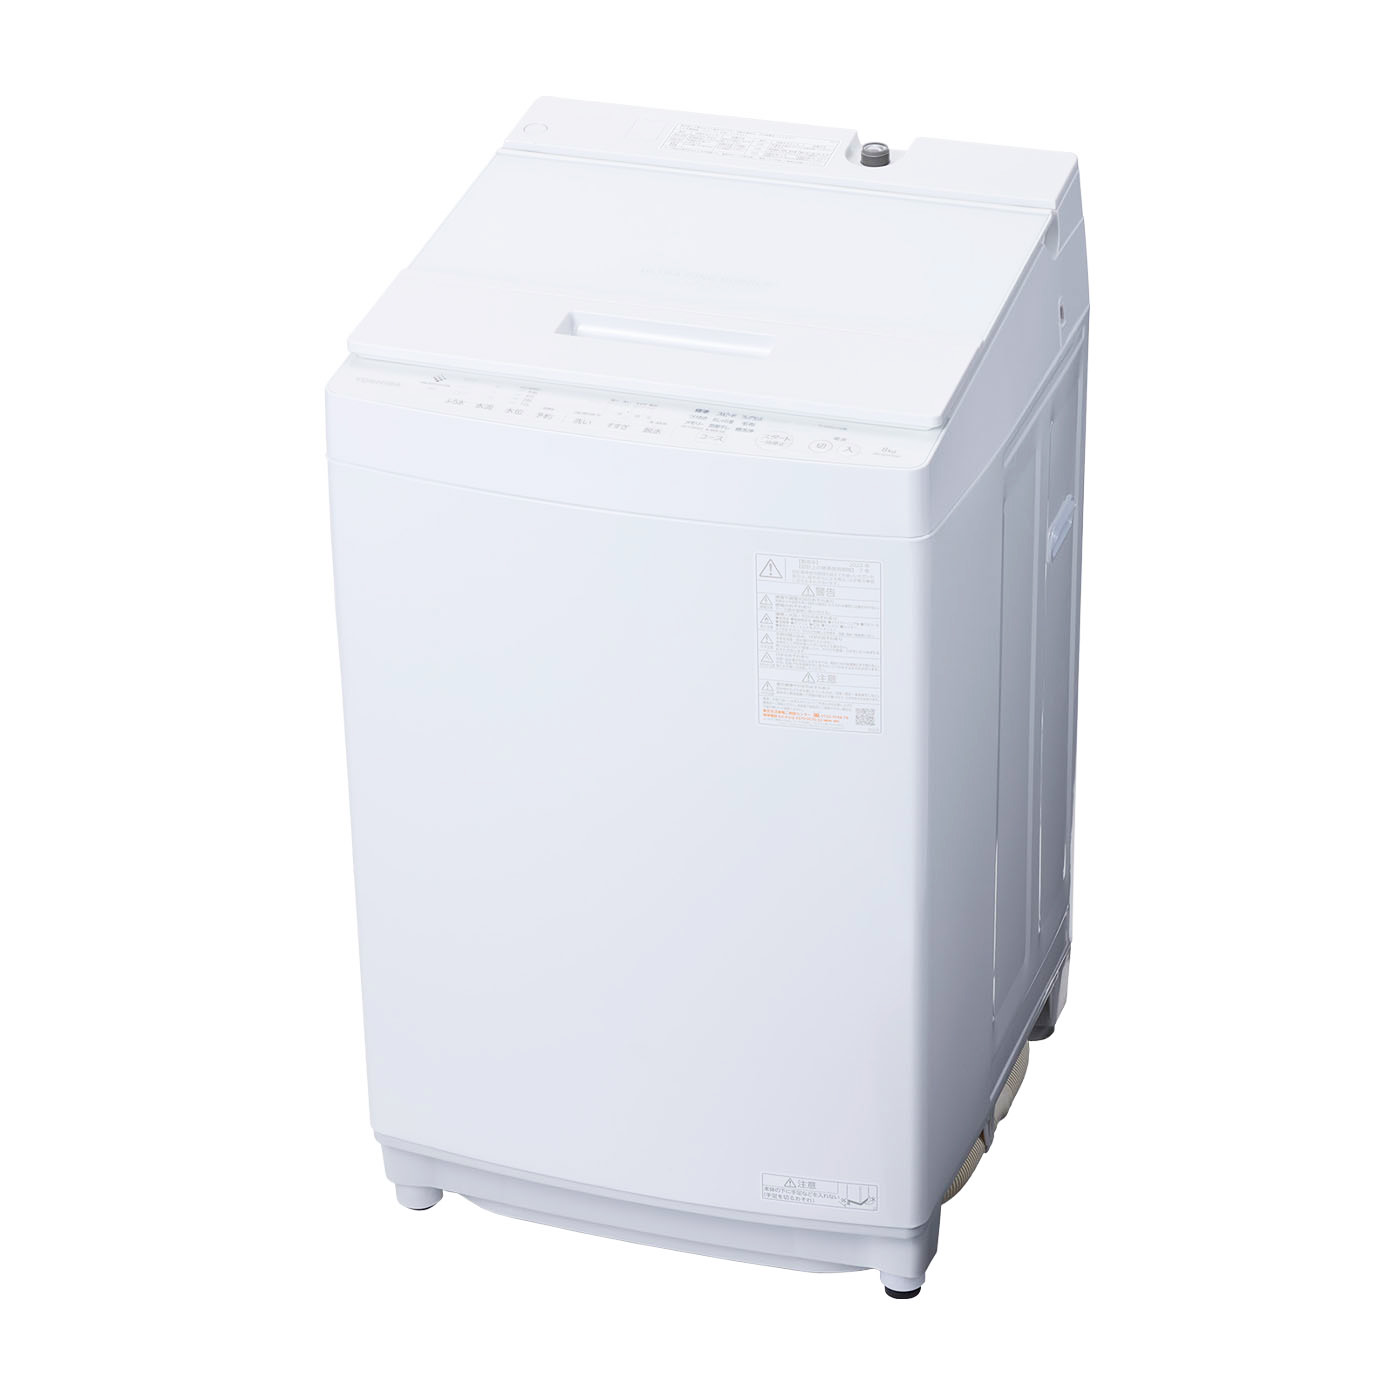 55F HITACHI 大容量乾燥機付き 洗濯機 8kg 4.5kg